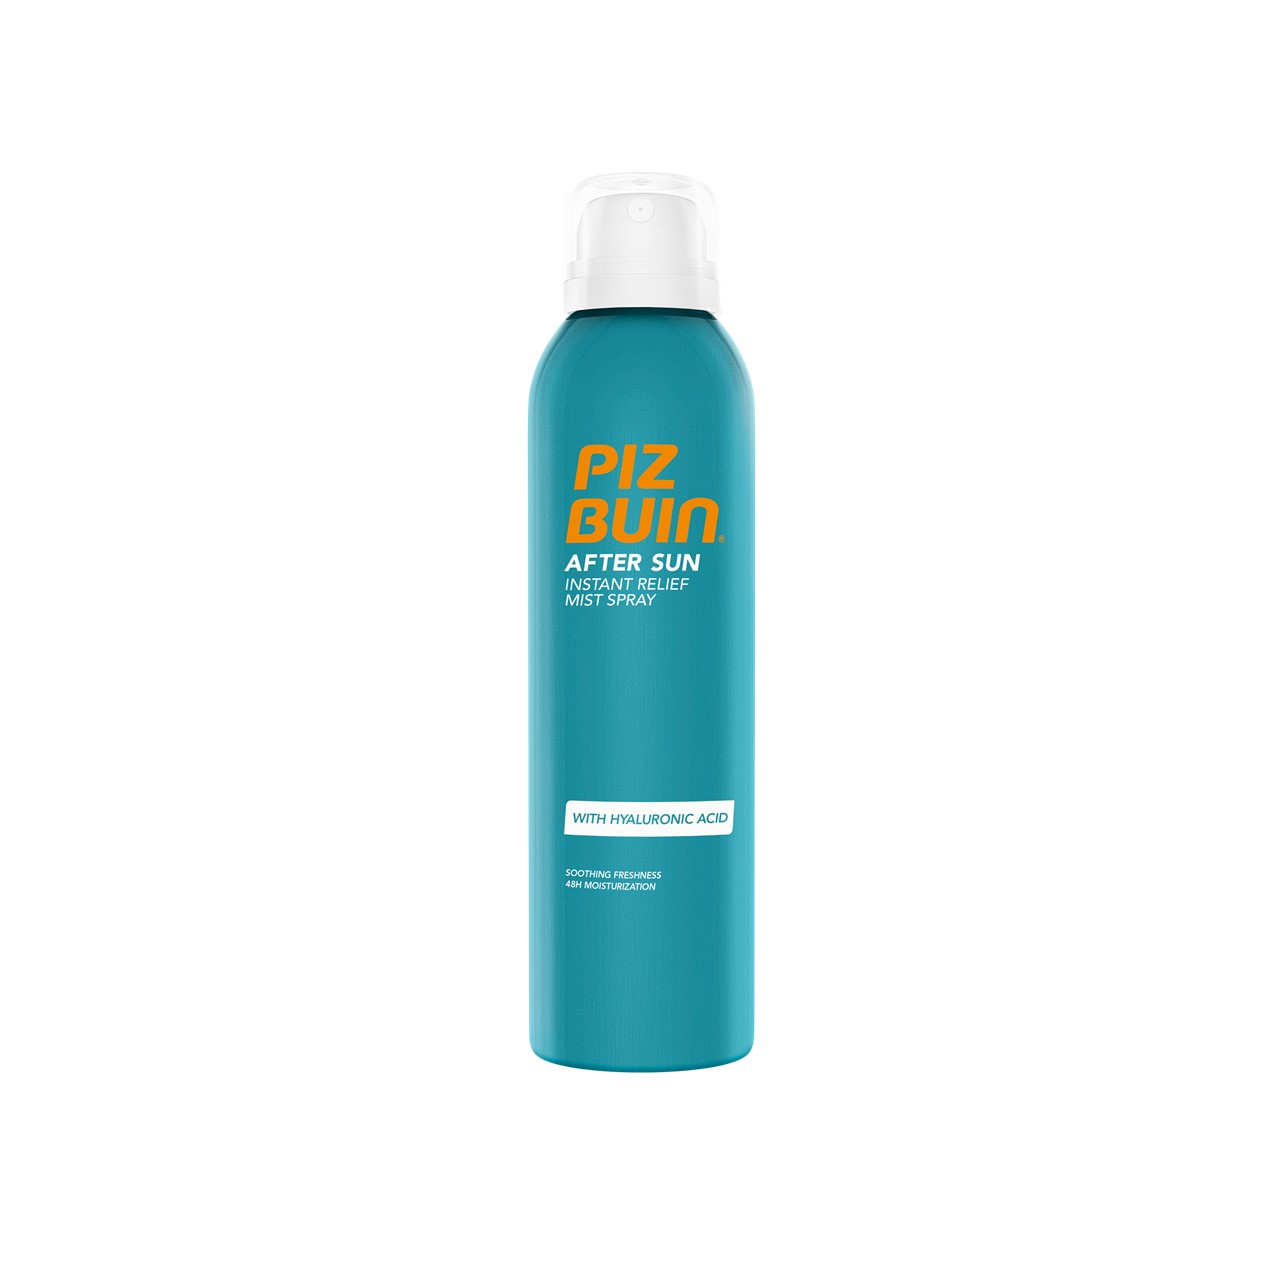 Piz Buin After Sun Instant Relief Mist Spray 200ml (6.76fl oz)